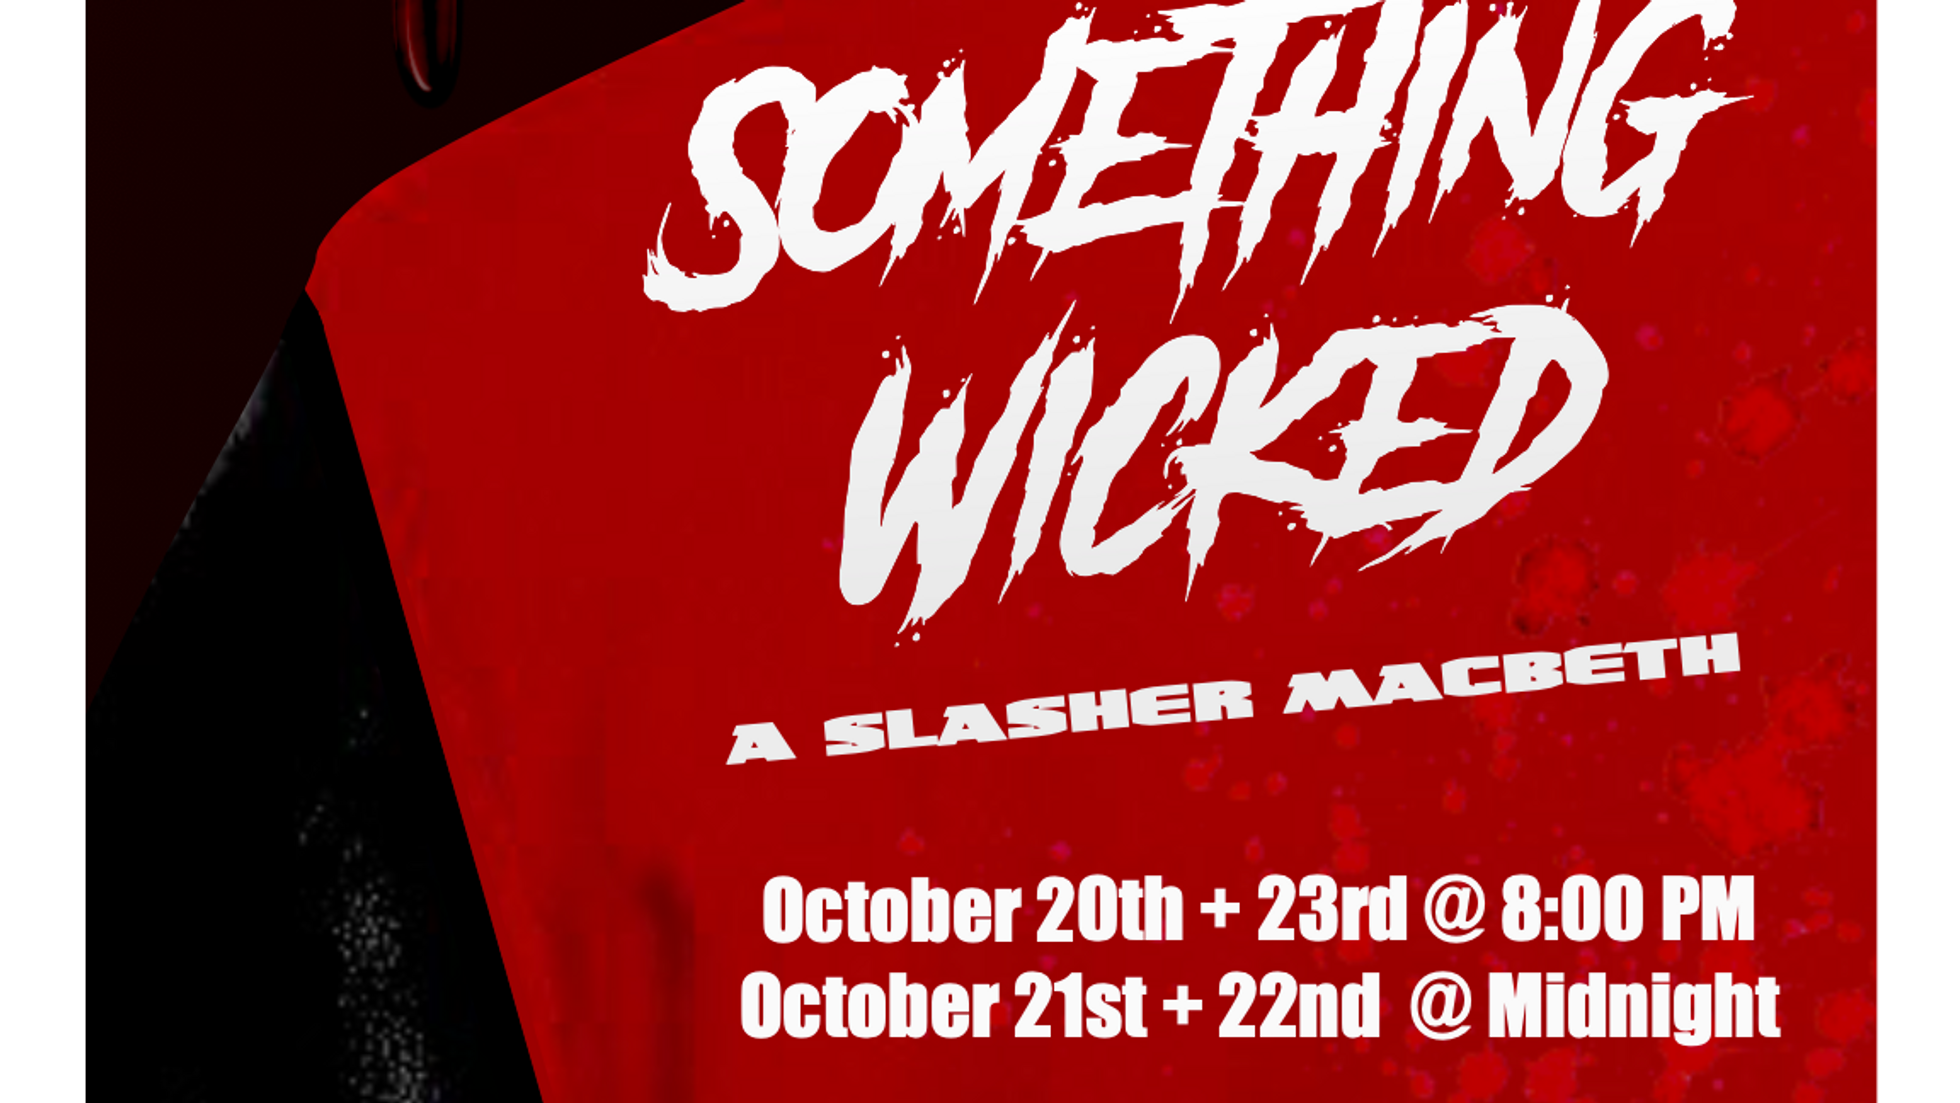 Something Wicked: A Slasher Macbeth